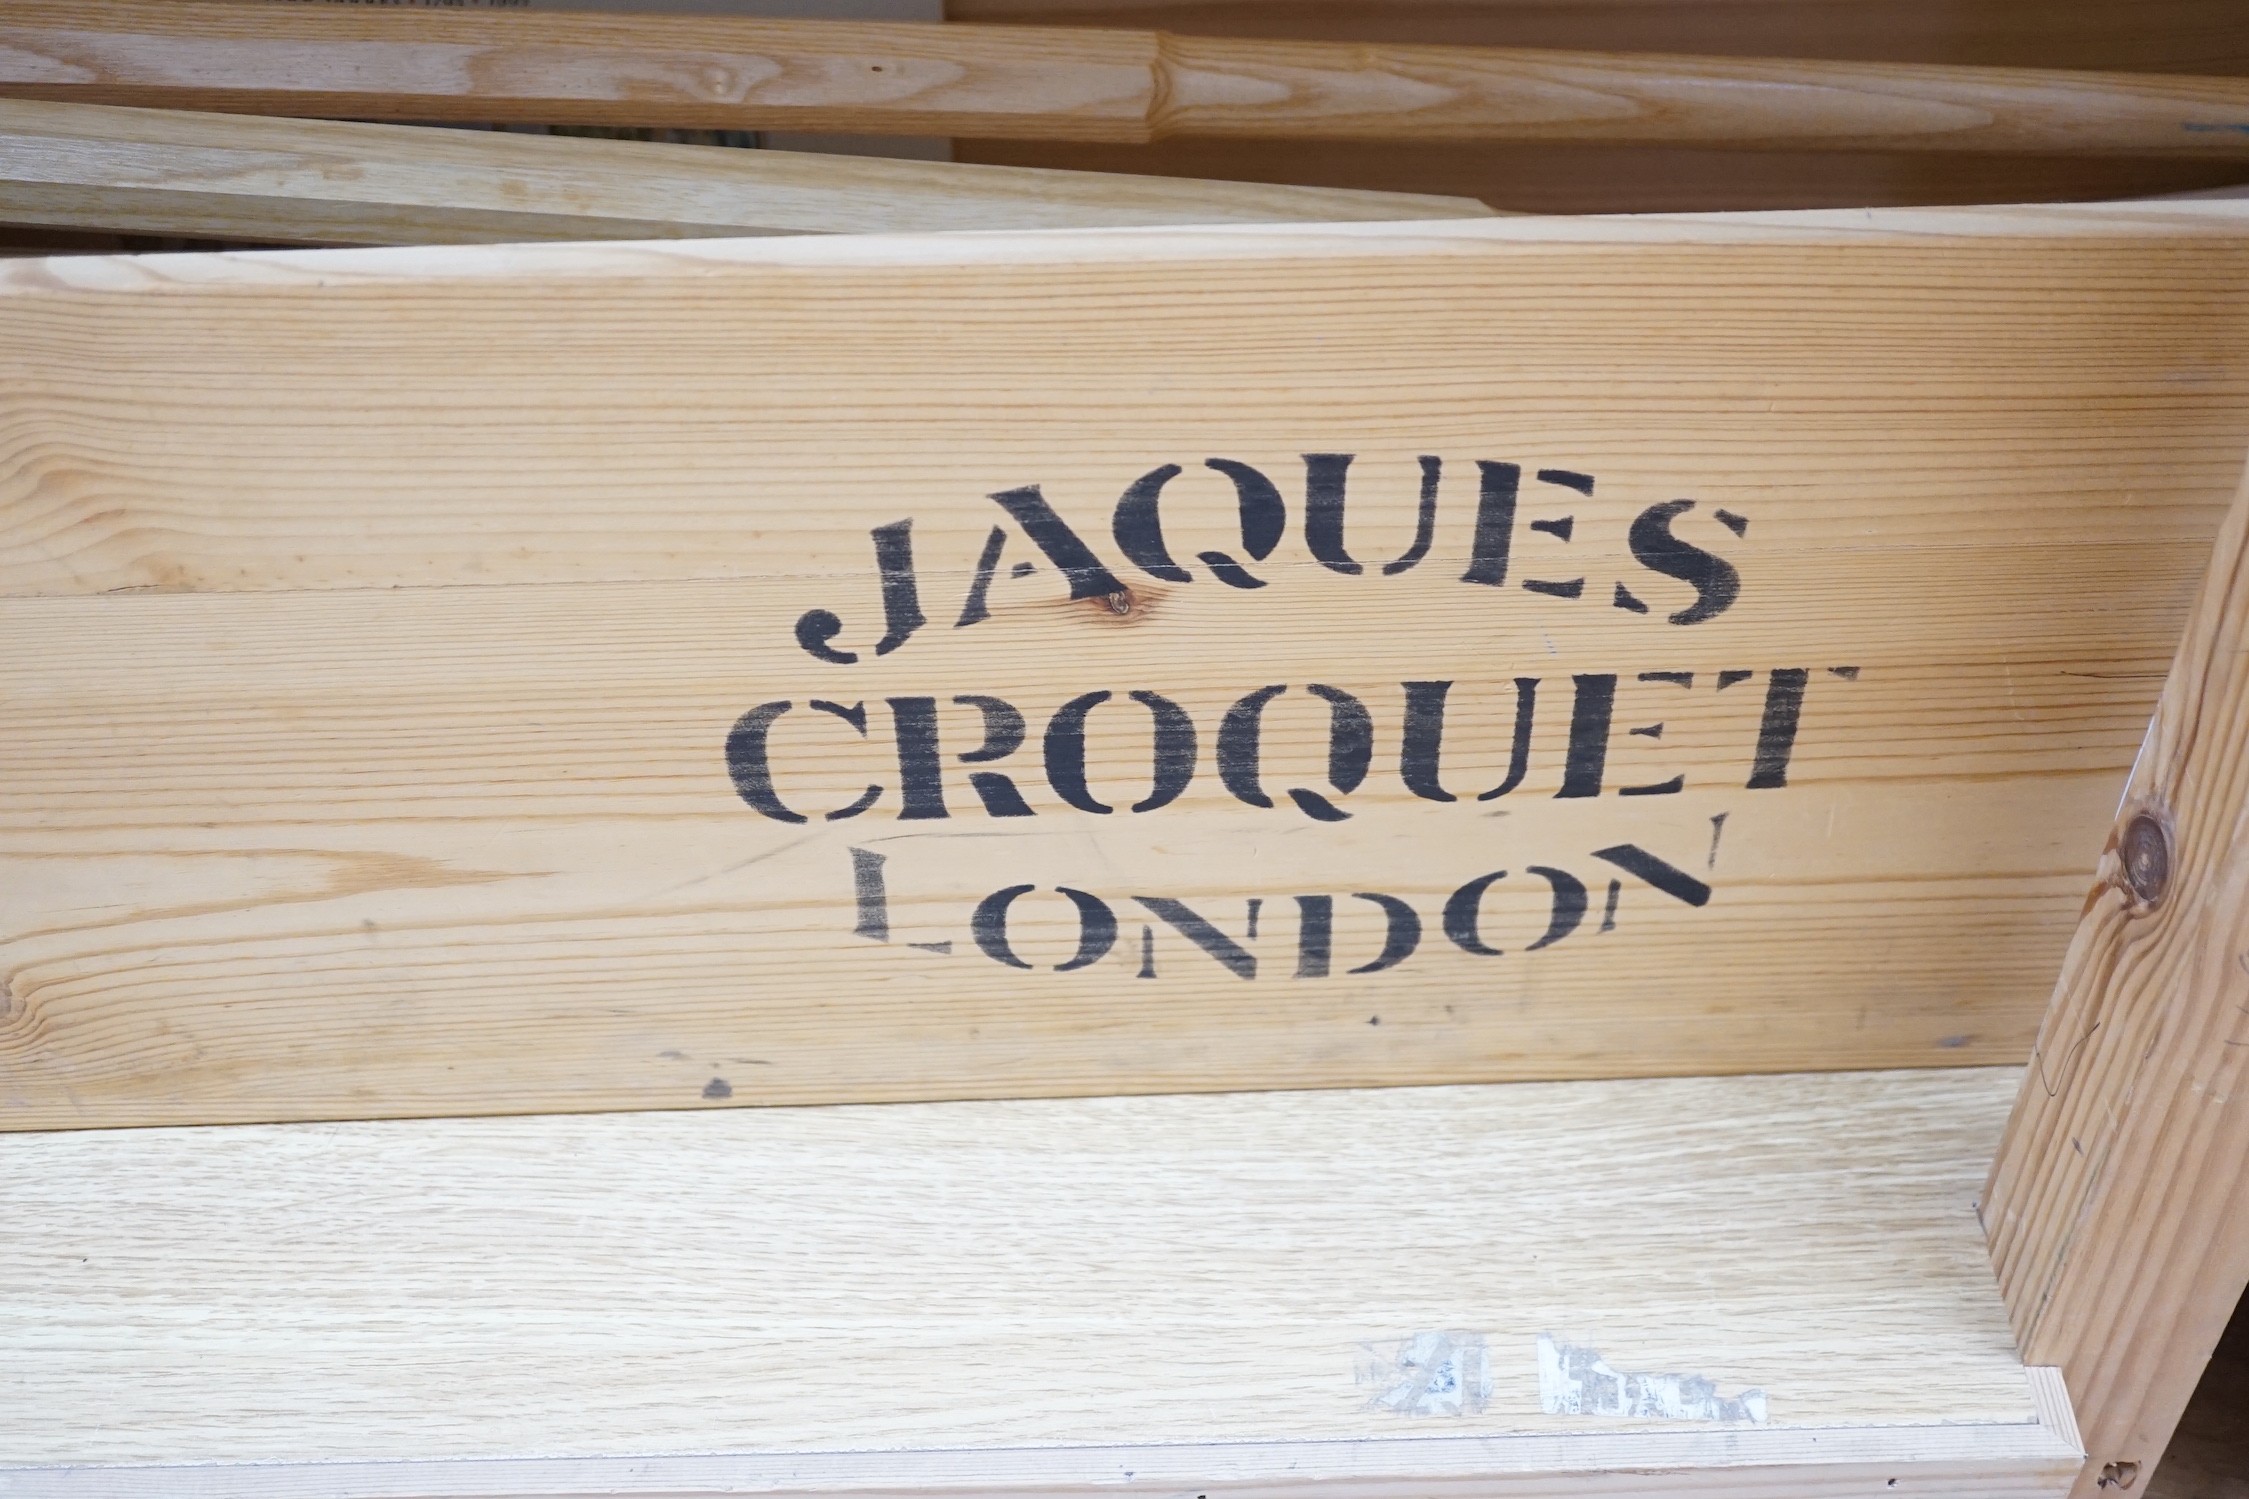 A Jaques croquet set, in original pine box - Image 2 of 4